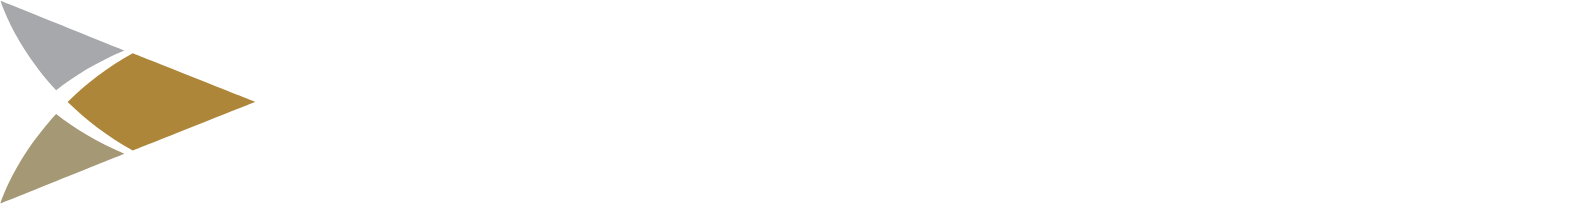 Bank of New York Mellon Logo groß für dunkle Hintergründe (transparentes PNG)